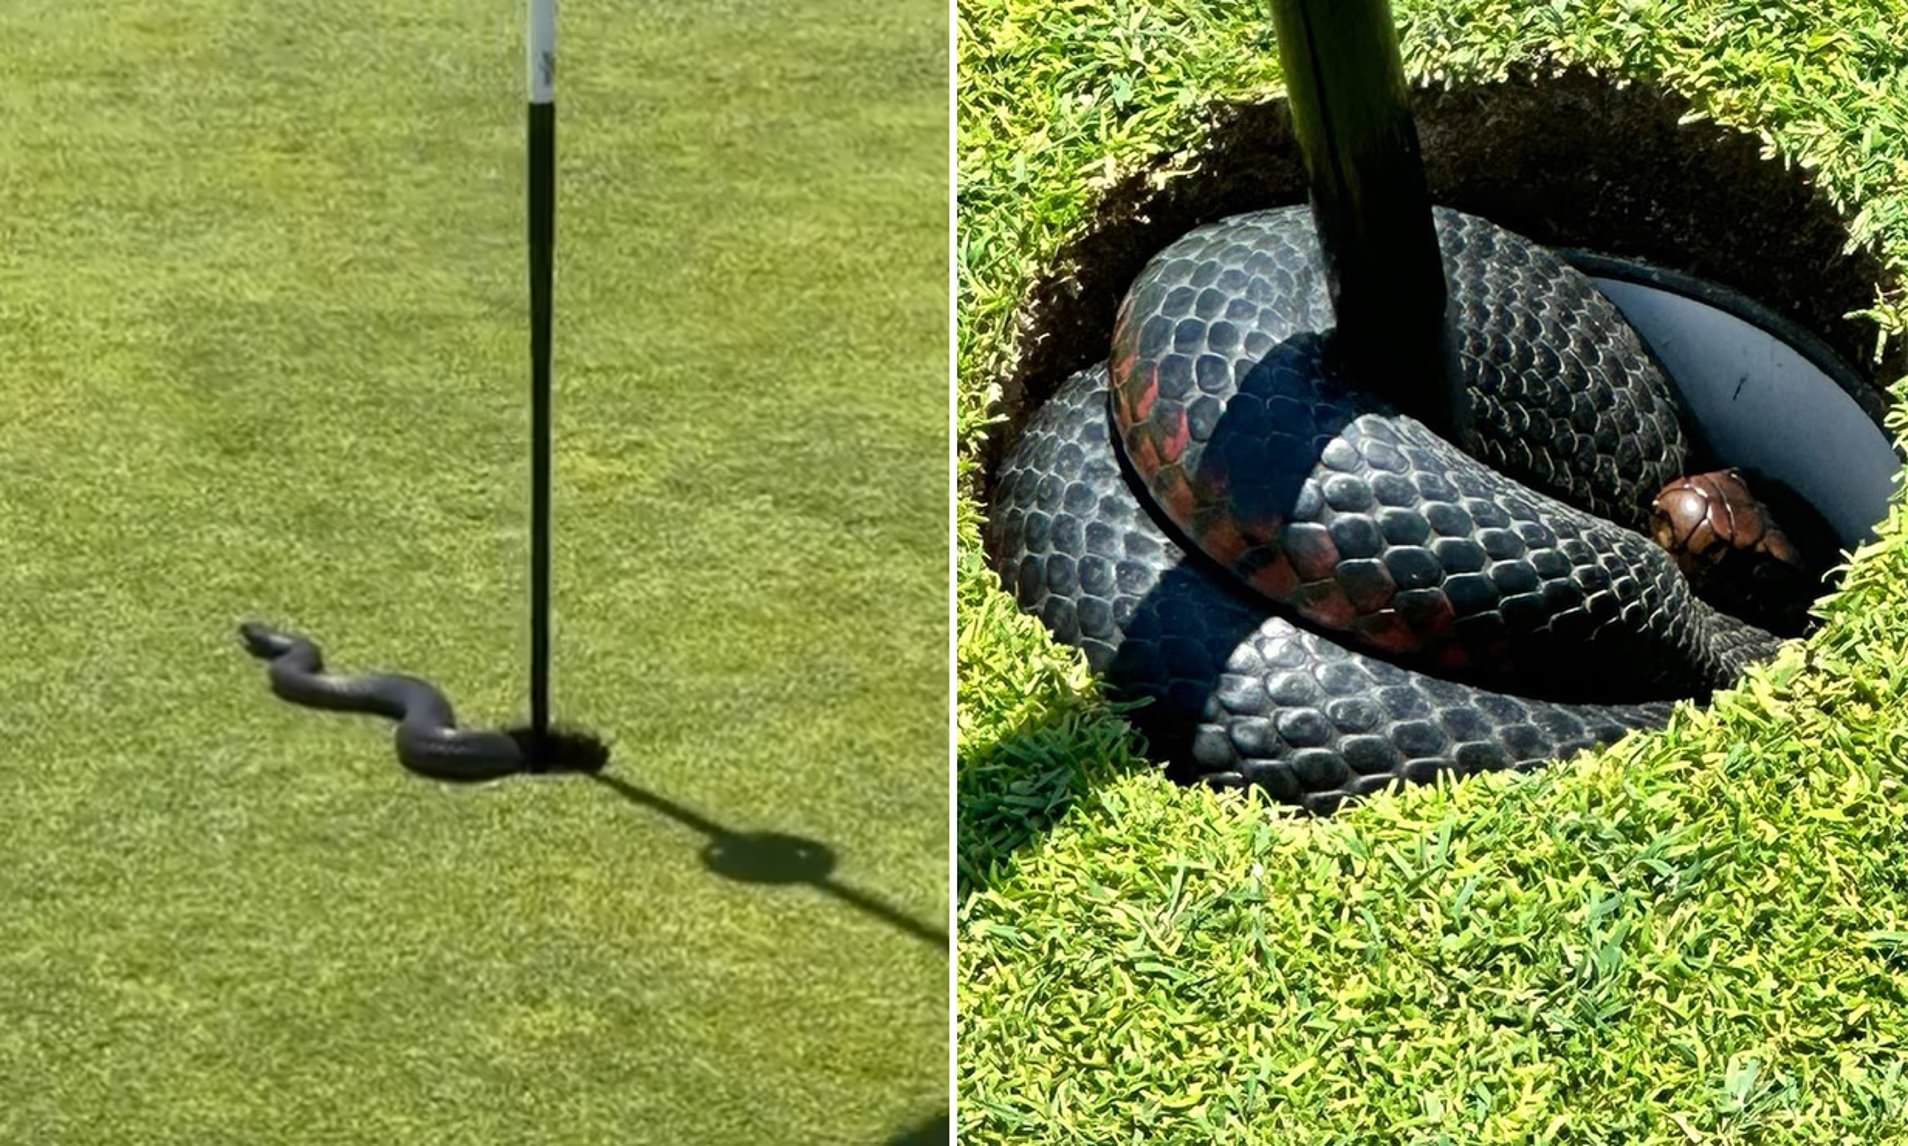 Photo: golf bet snakes